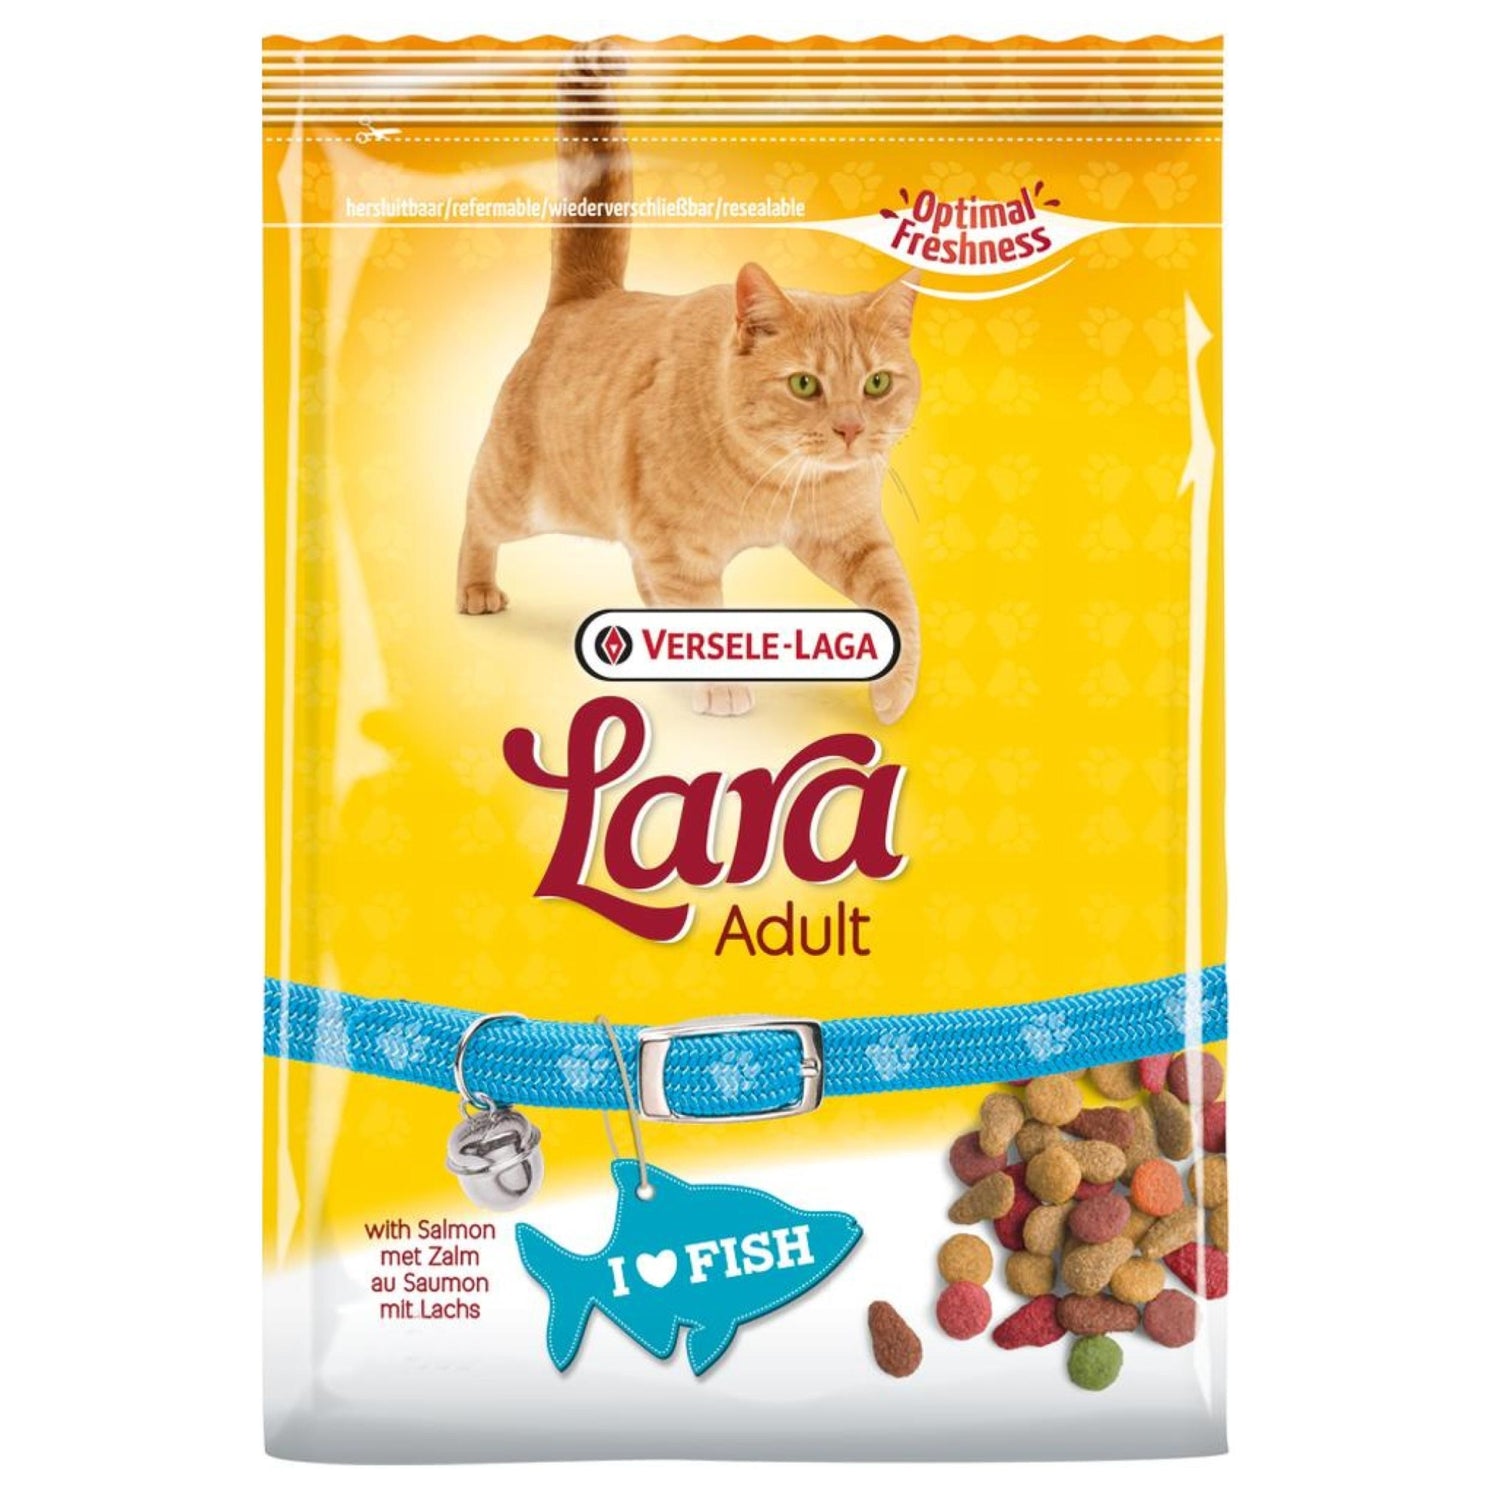 Versele laga Lara Chunks with Salmon Cat Food